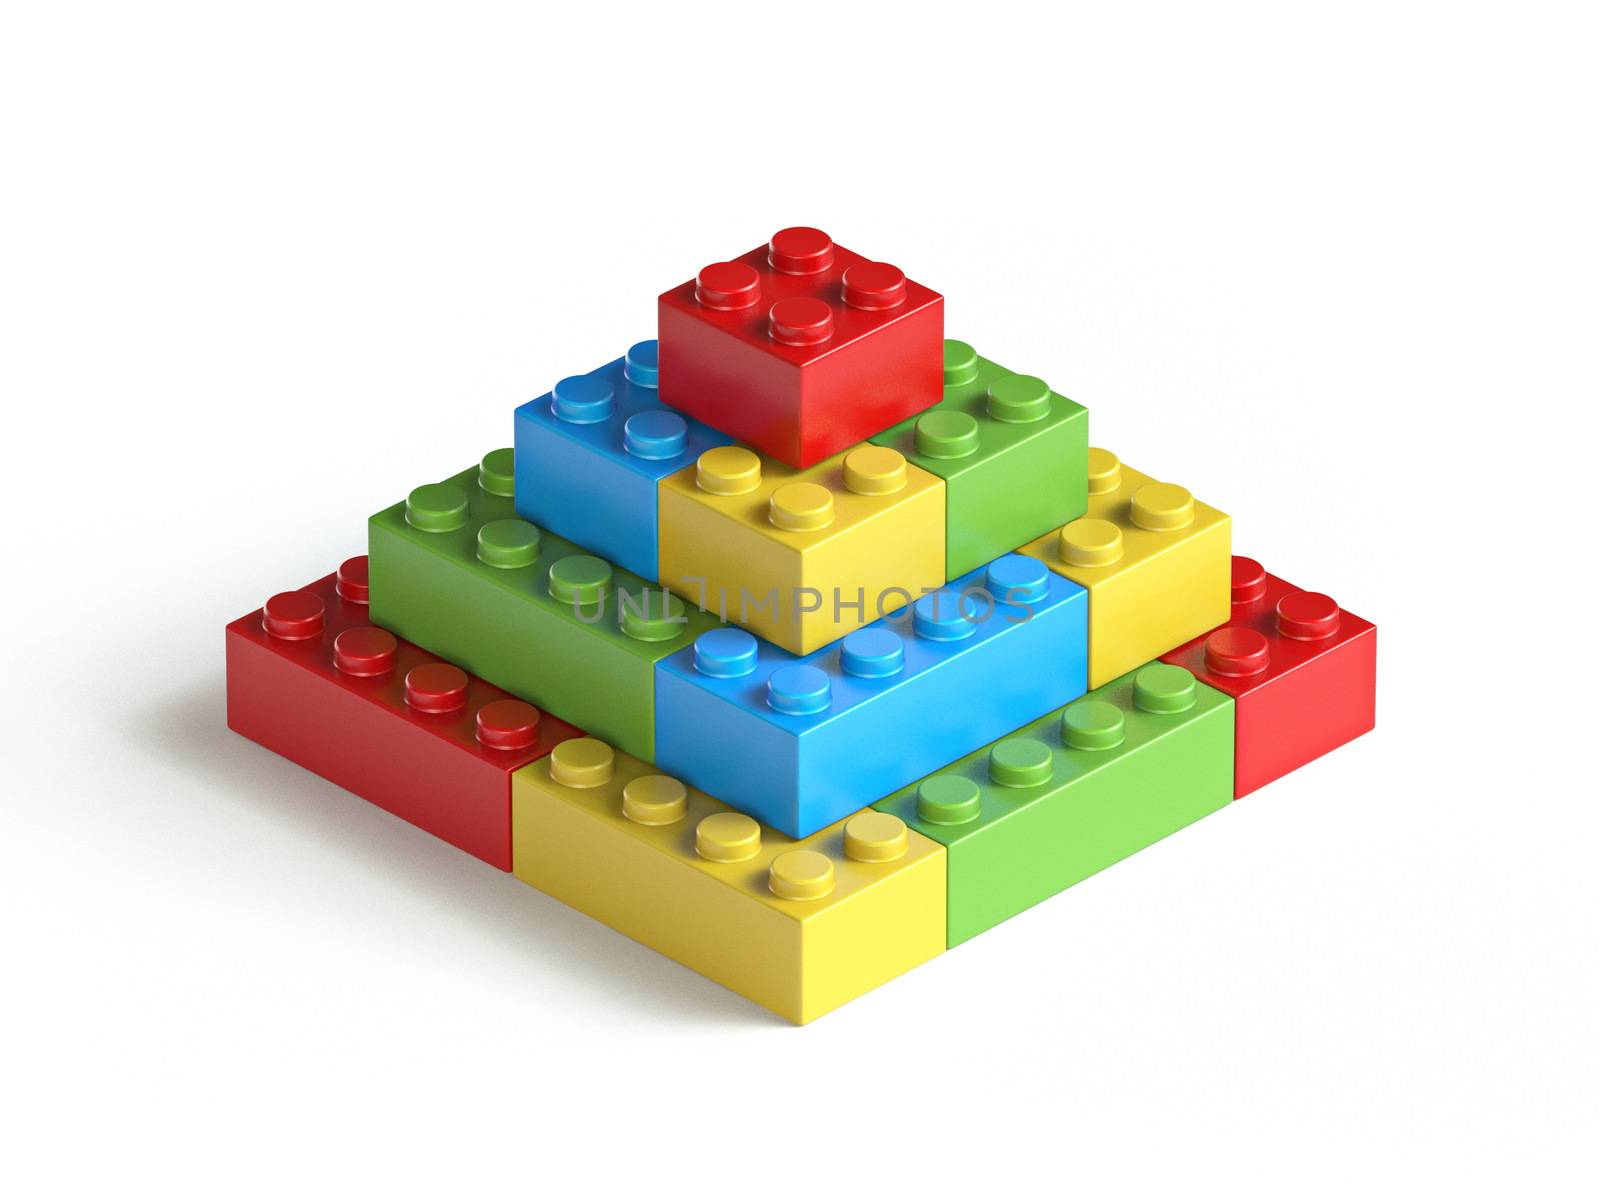 Toy brick pyramid 3D by djmilic